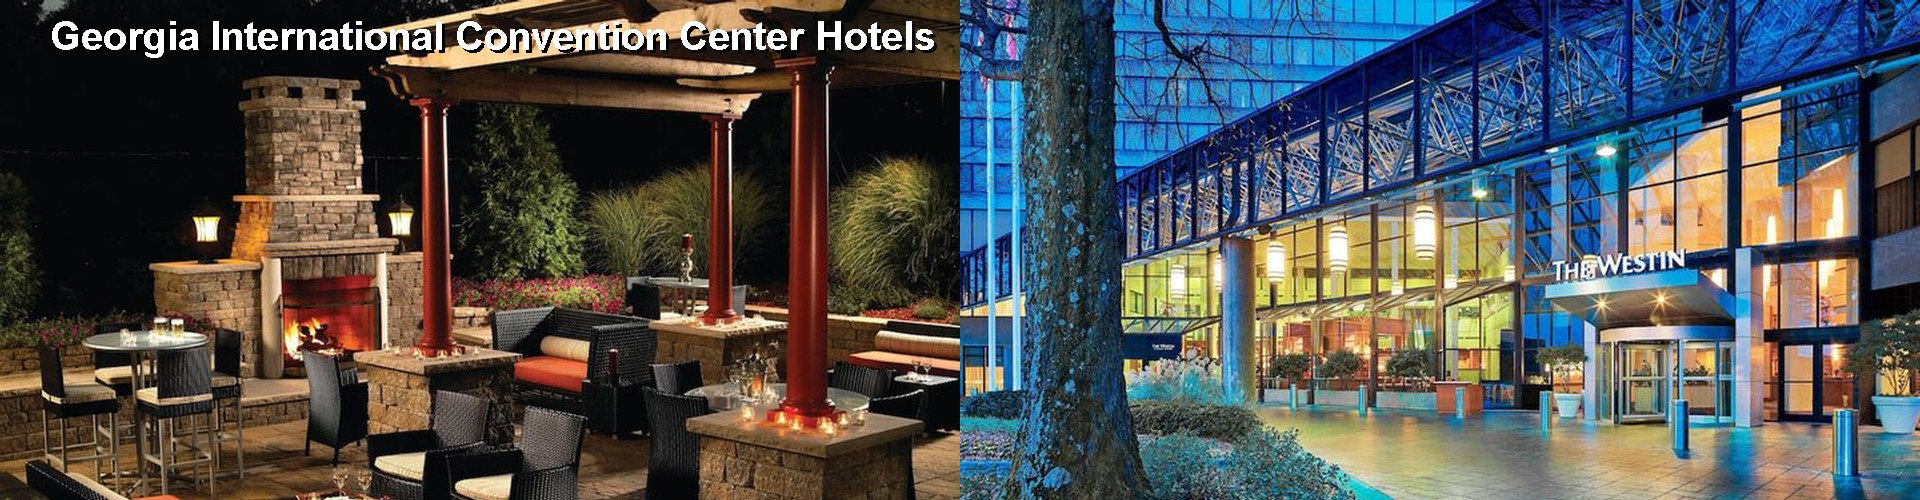 5 Best Hotels near Georgia International Convention Center